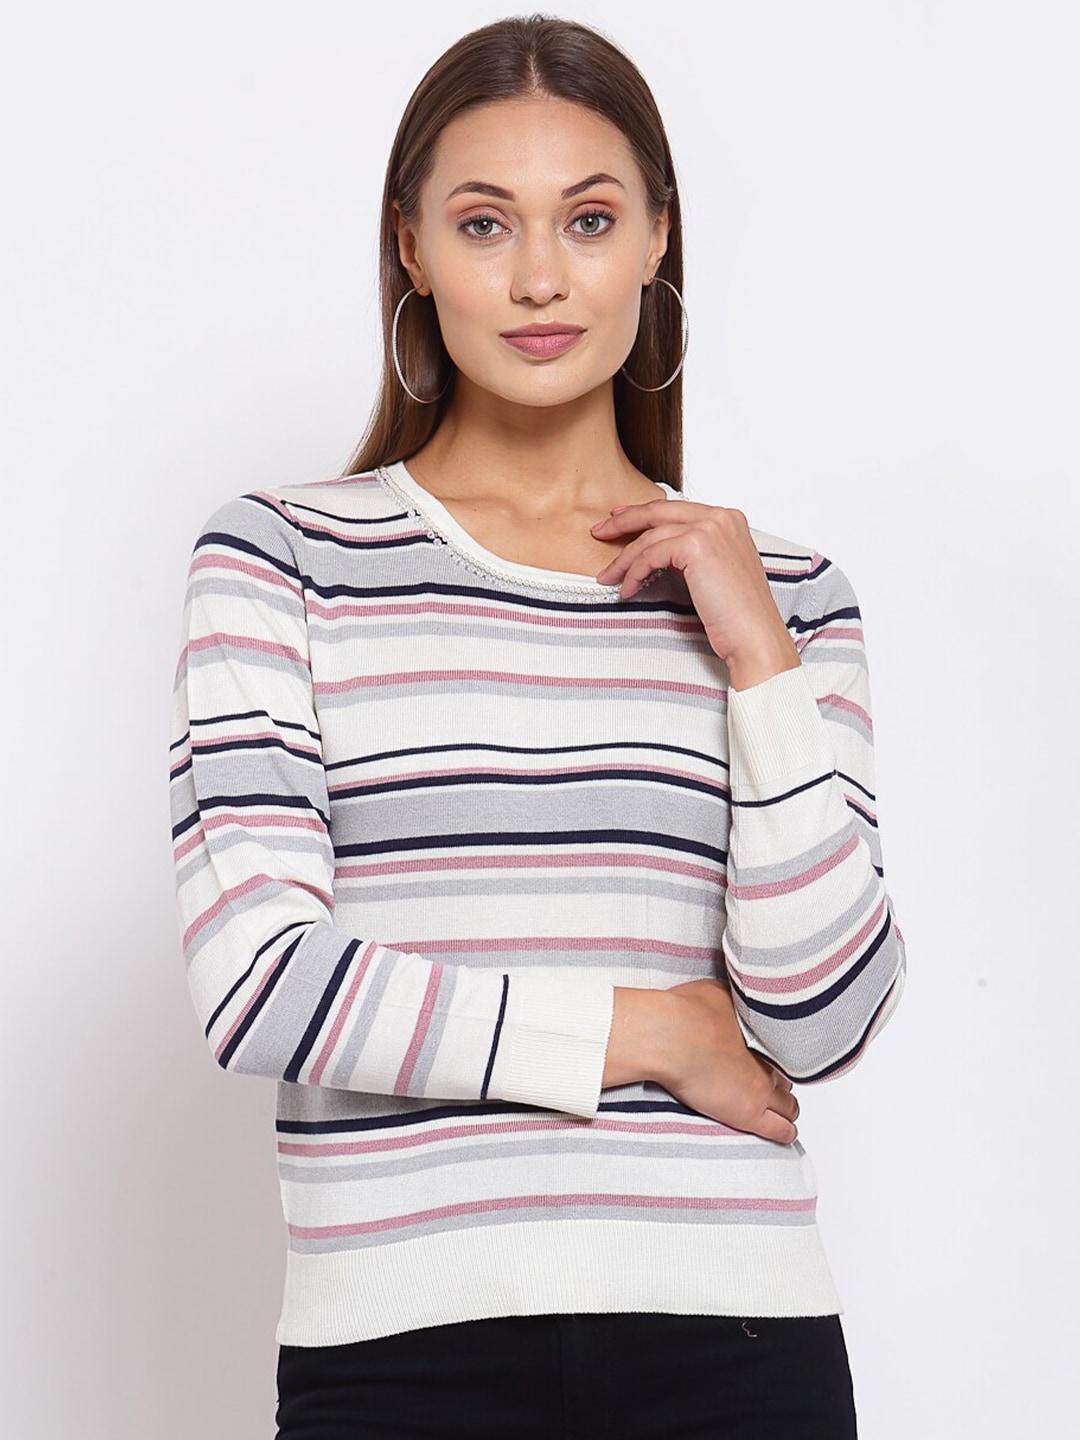 klotthe-women-white-&-pink-striped-woolen-pullover